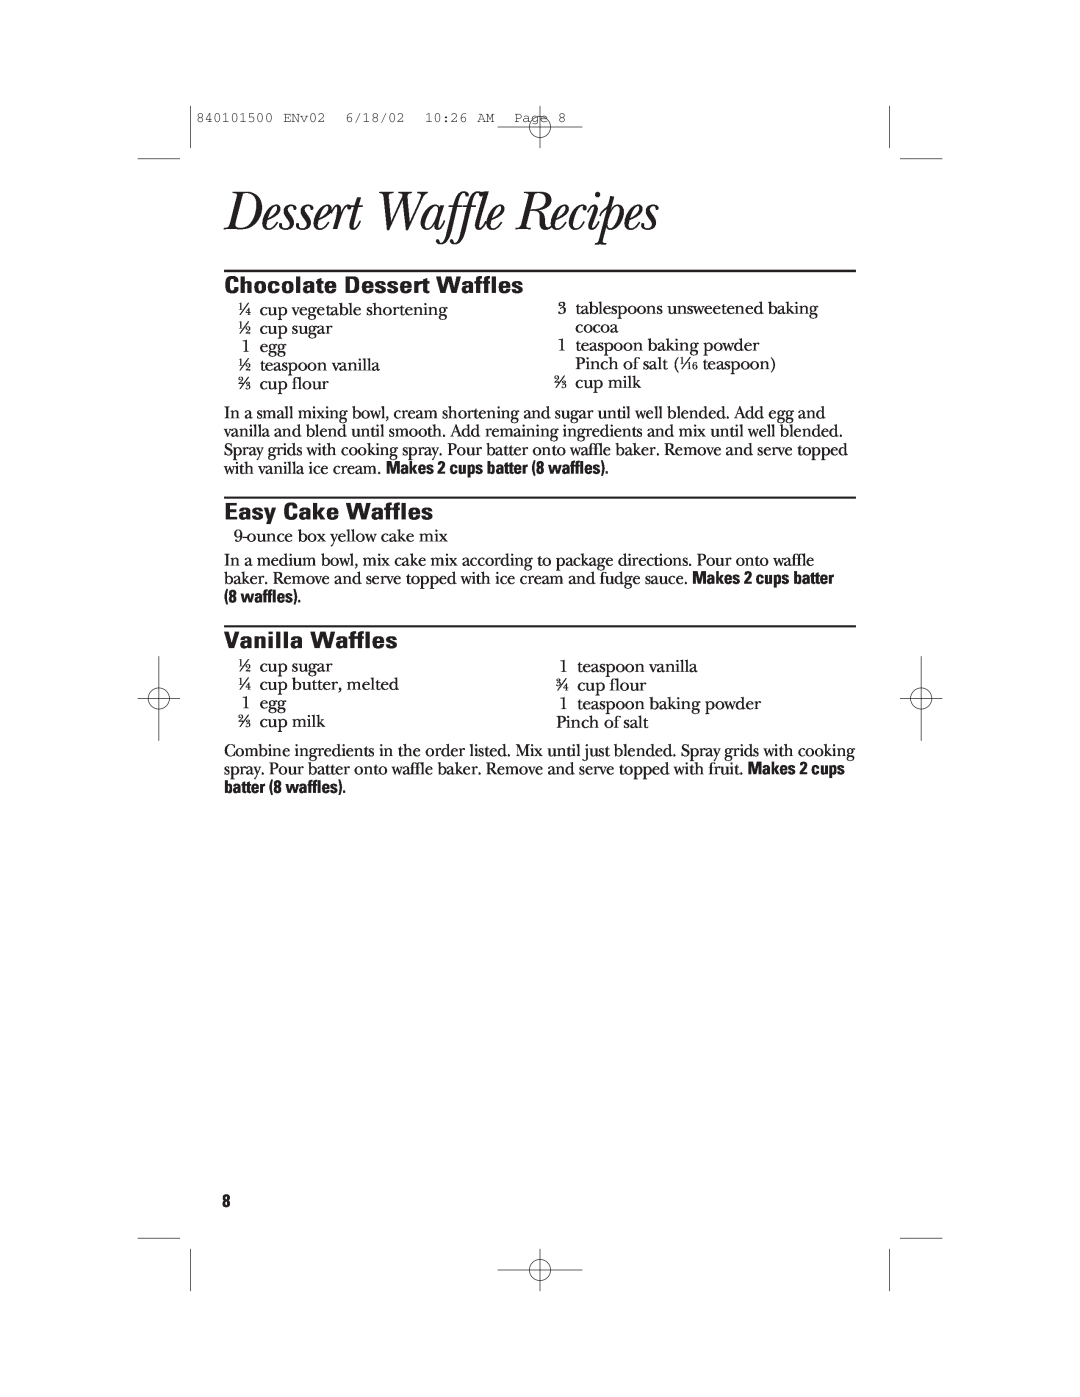 GE 840101500 manual Dessert Waffle Recipes, Chocolate Dessert Waffles, Easy Cake Waffles, Vanilla Waffles 